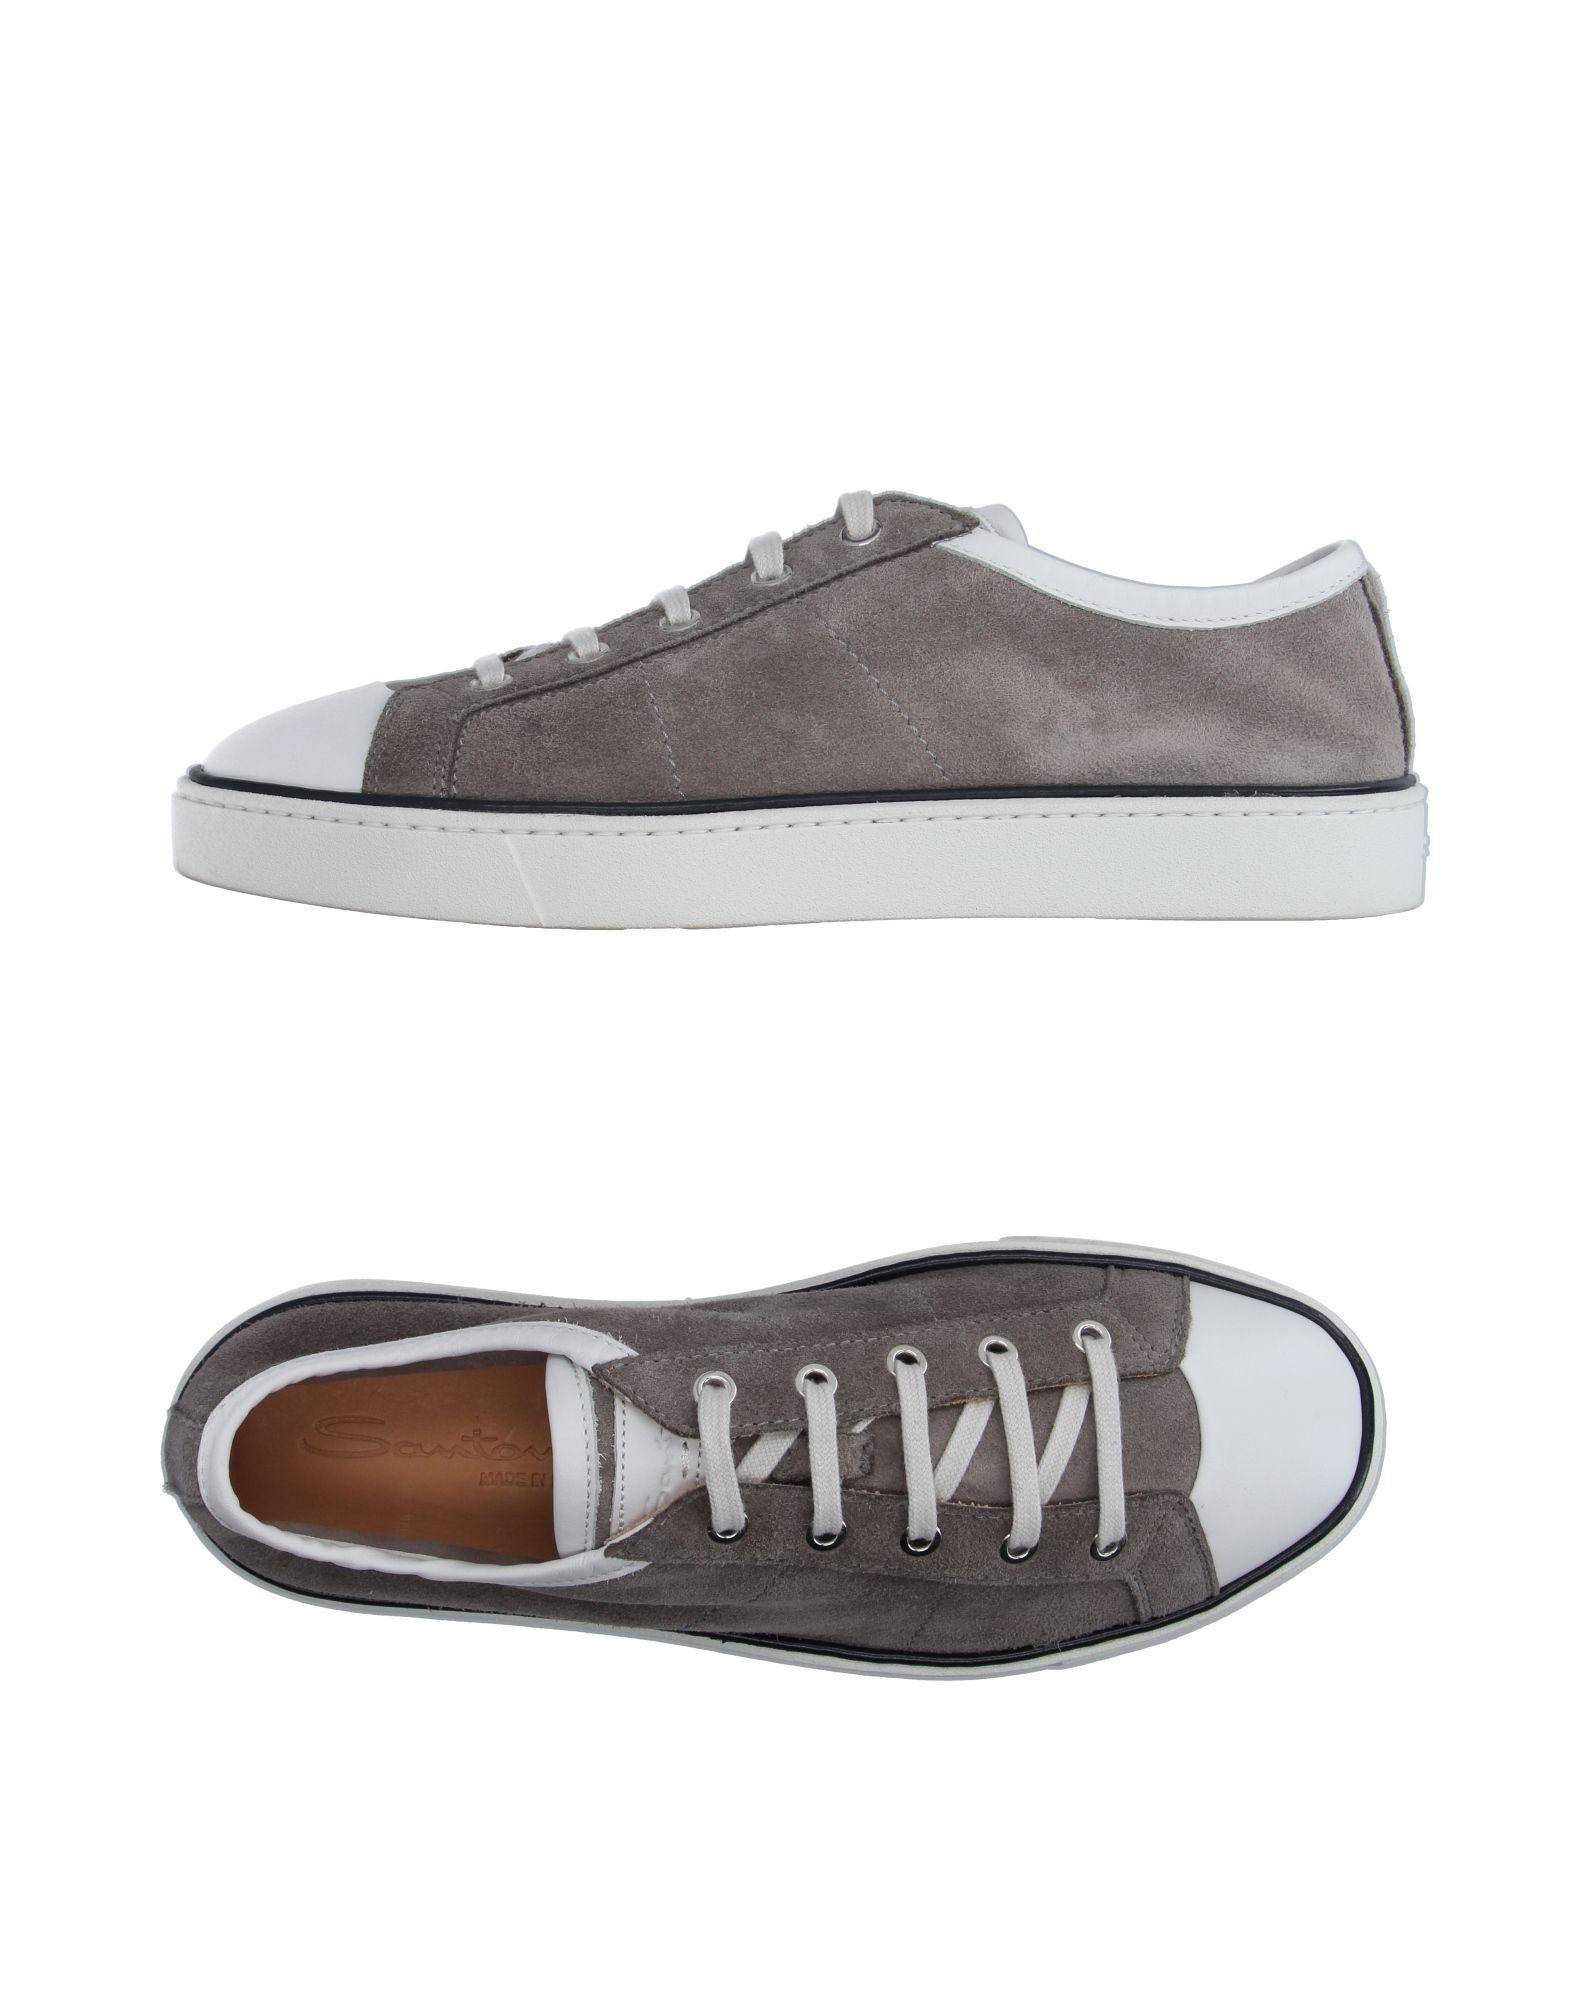 Santoni Leather Low-tops & Sneakers in Grey (Gray) for Men - Lyst